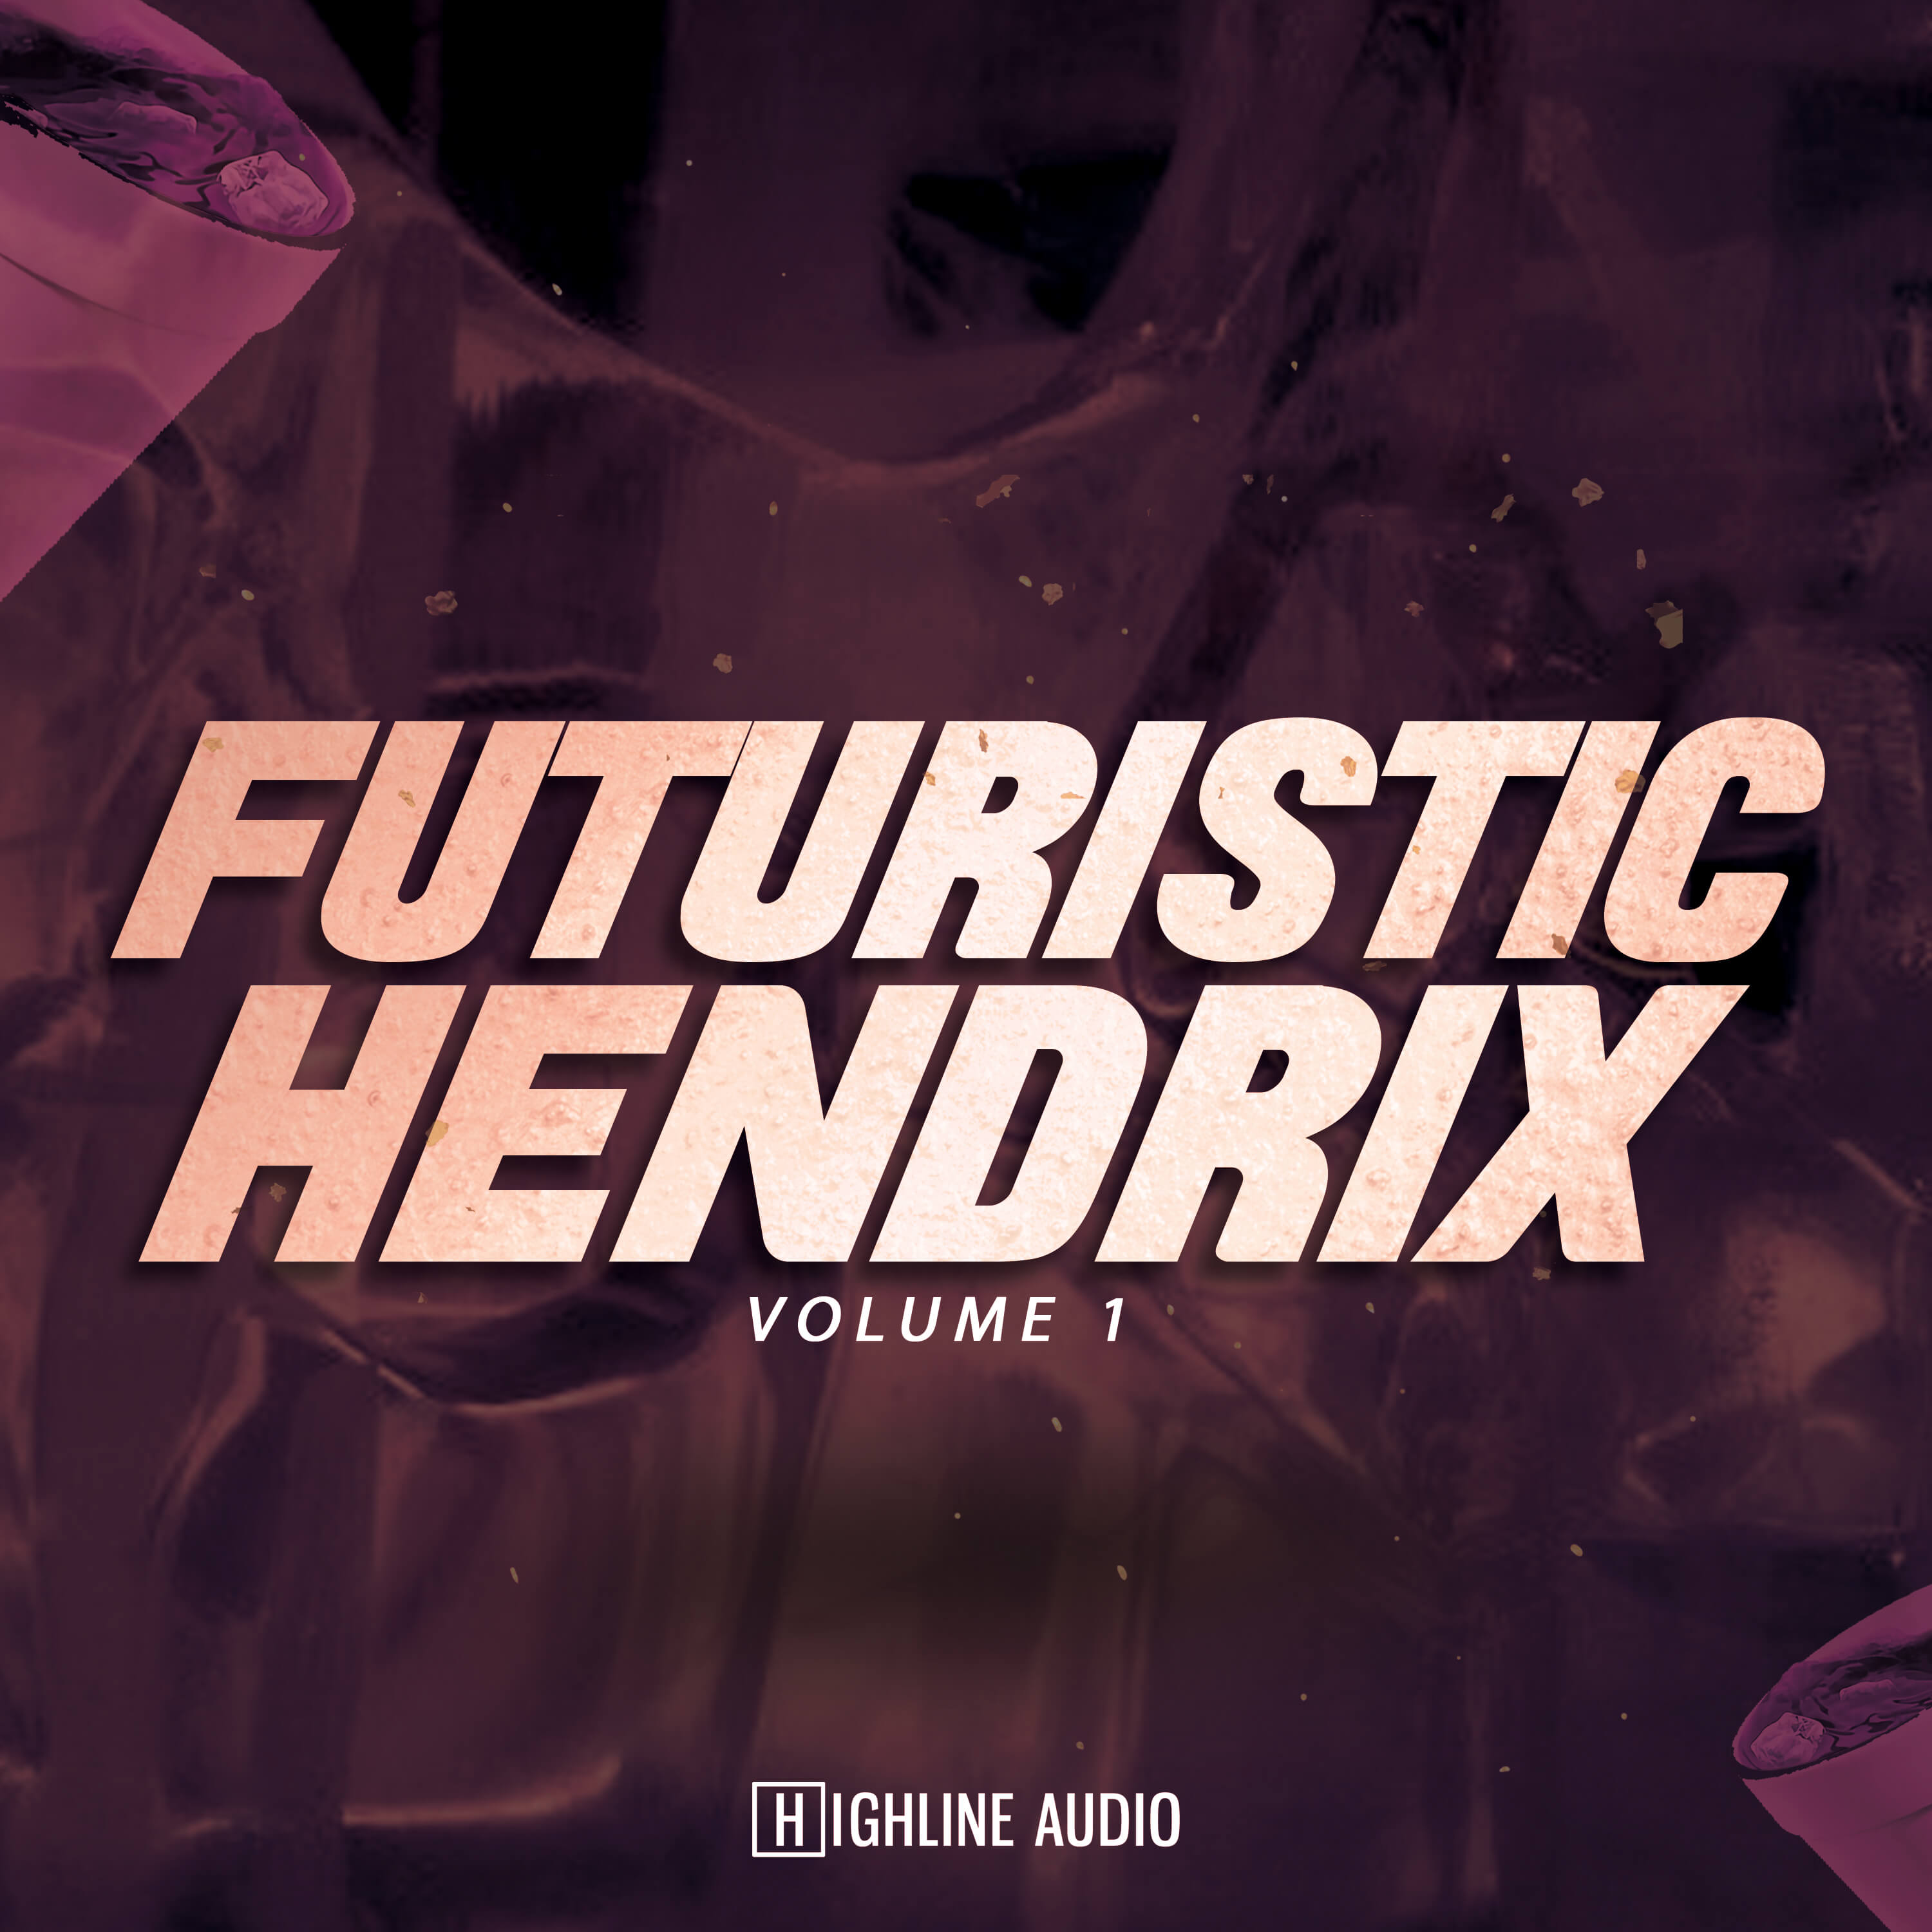 Futuristic Hendrix Volume 1 - Producer Sources